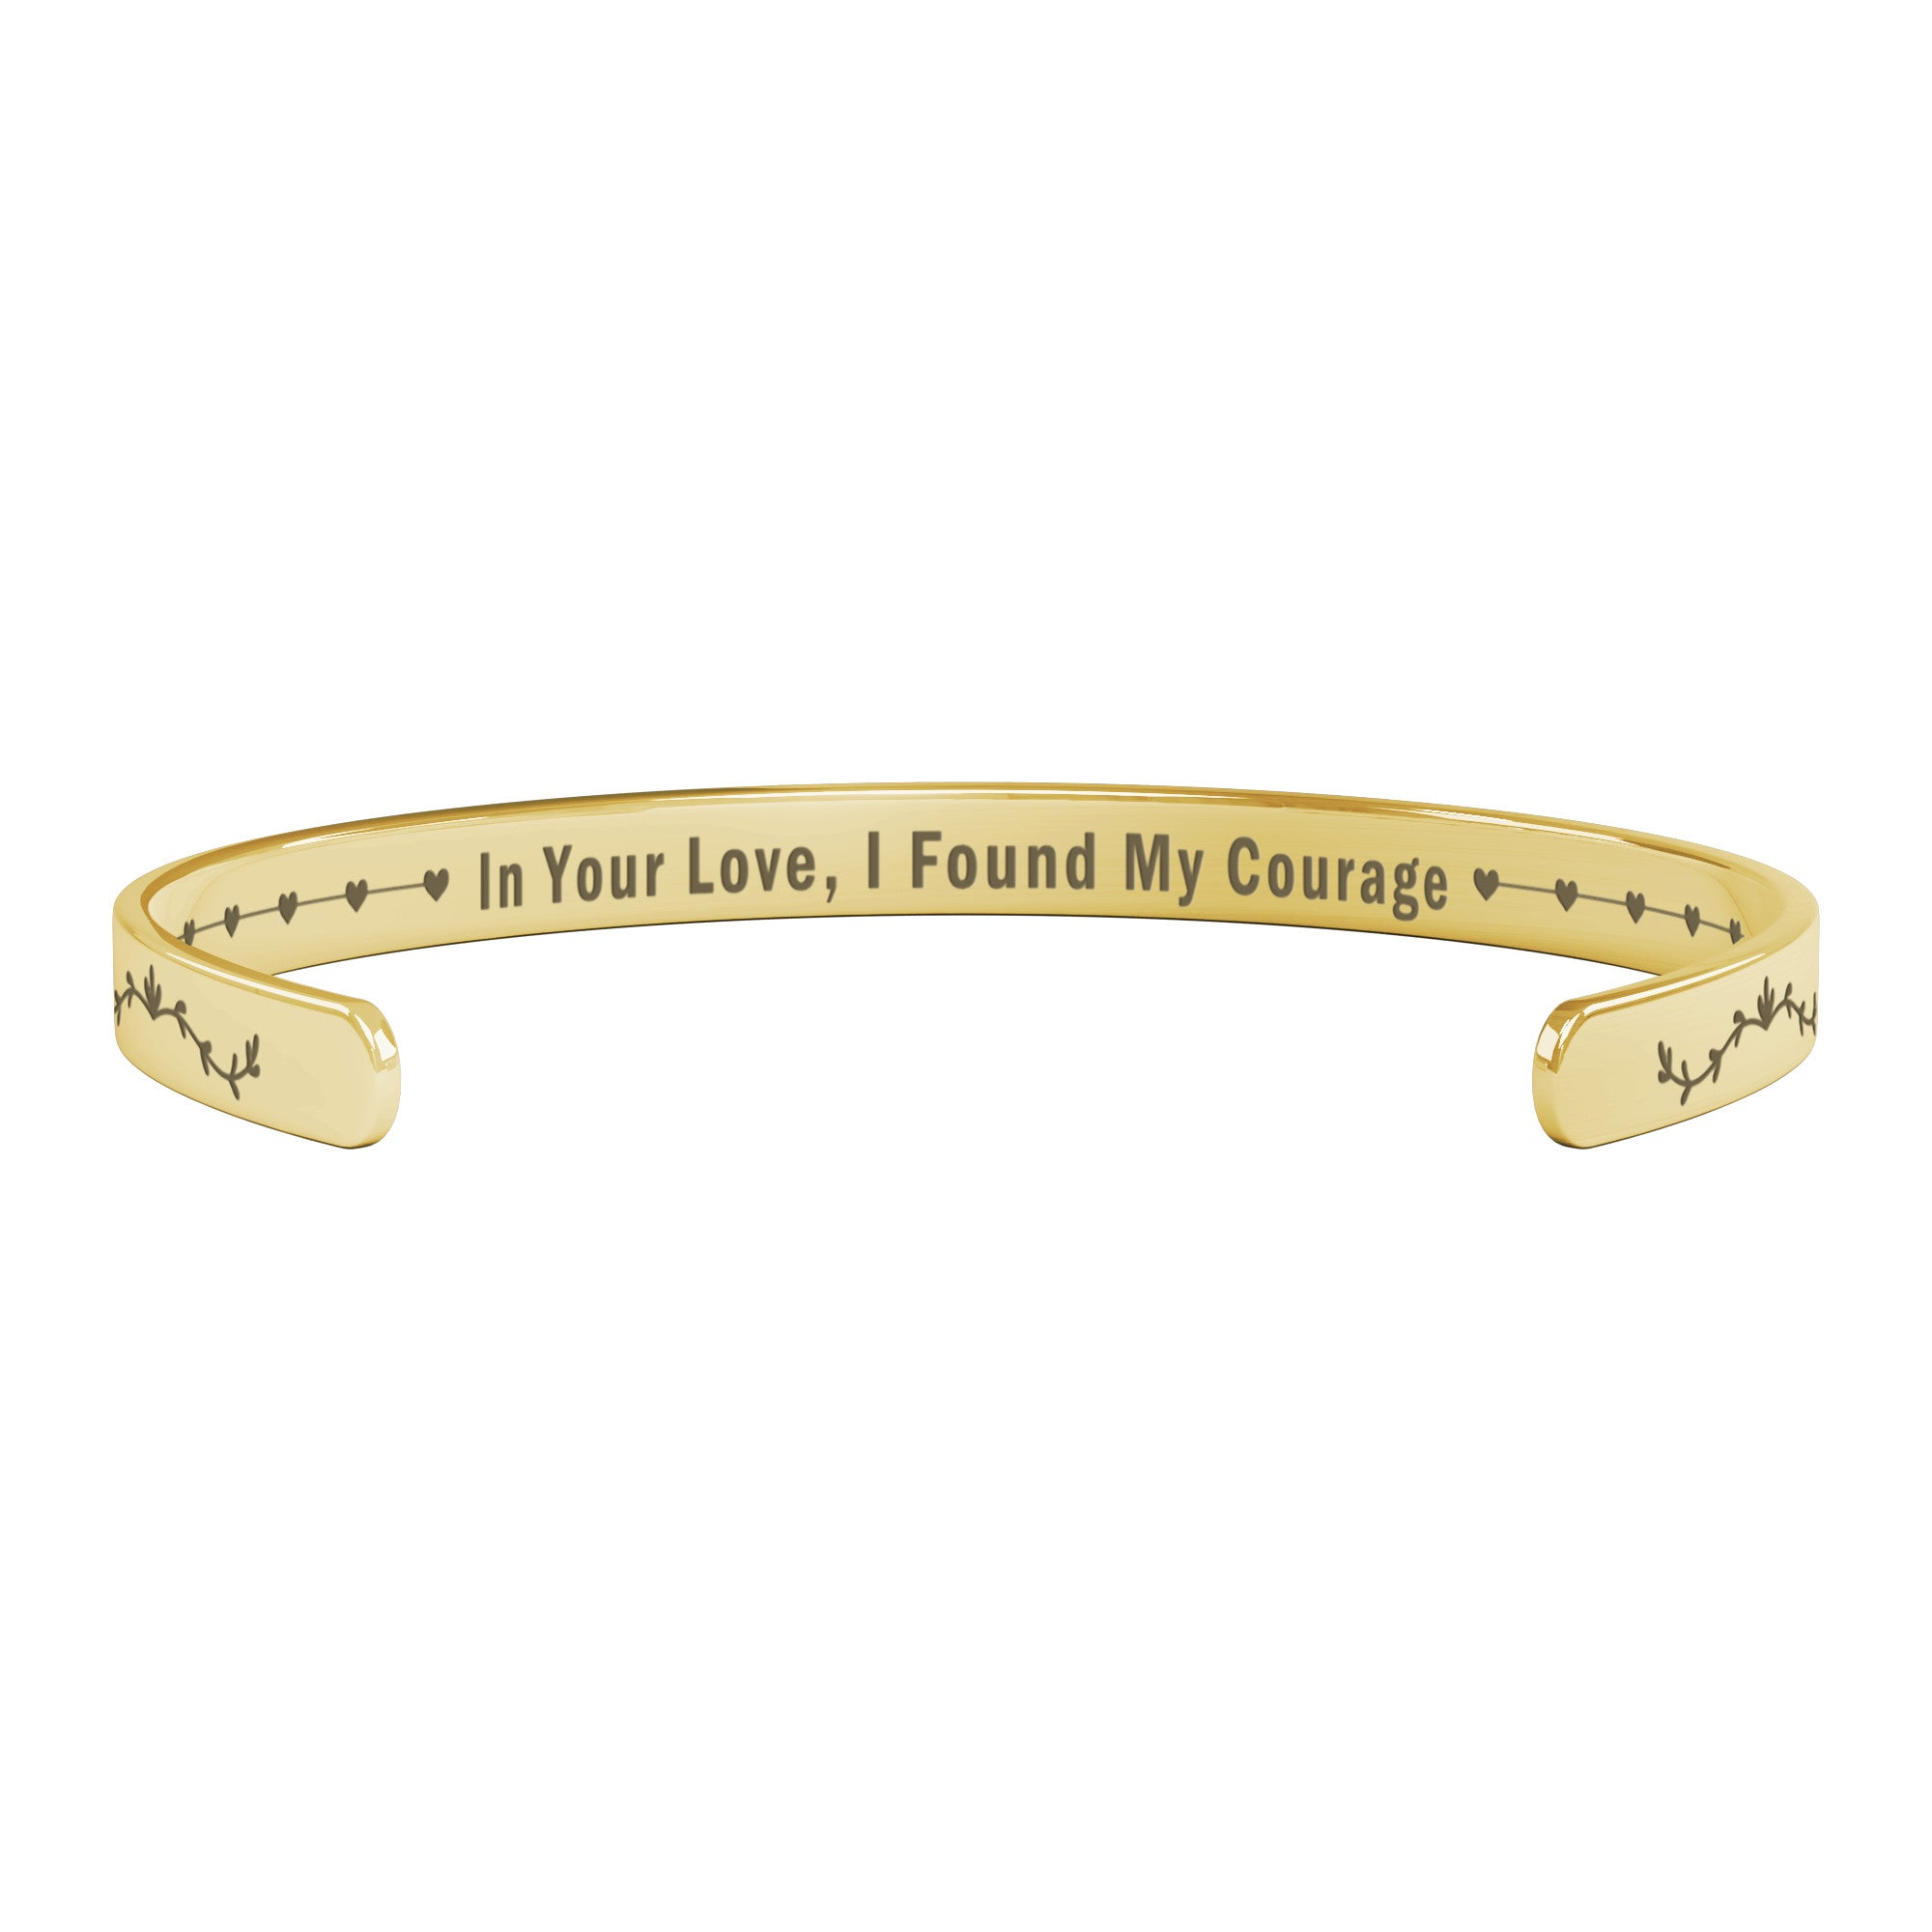 In Your Love I Found My Courage Cuff Bracelet